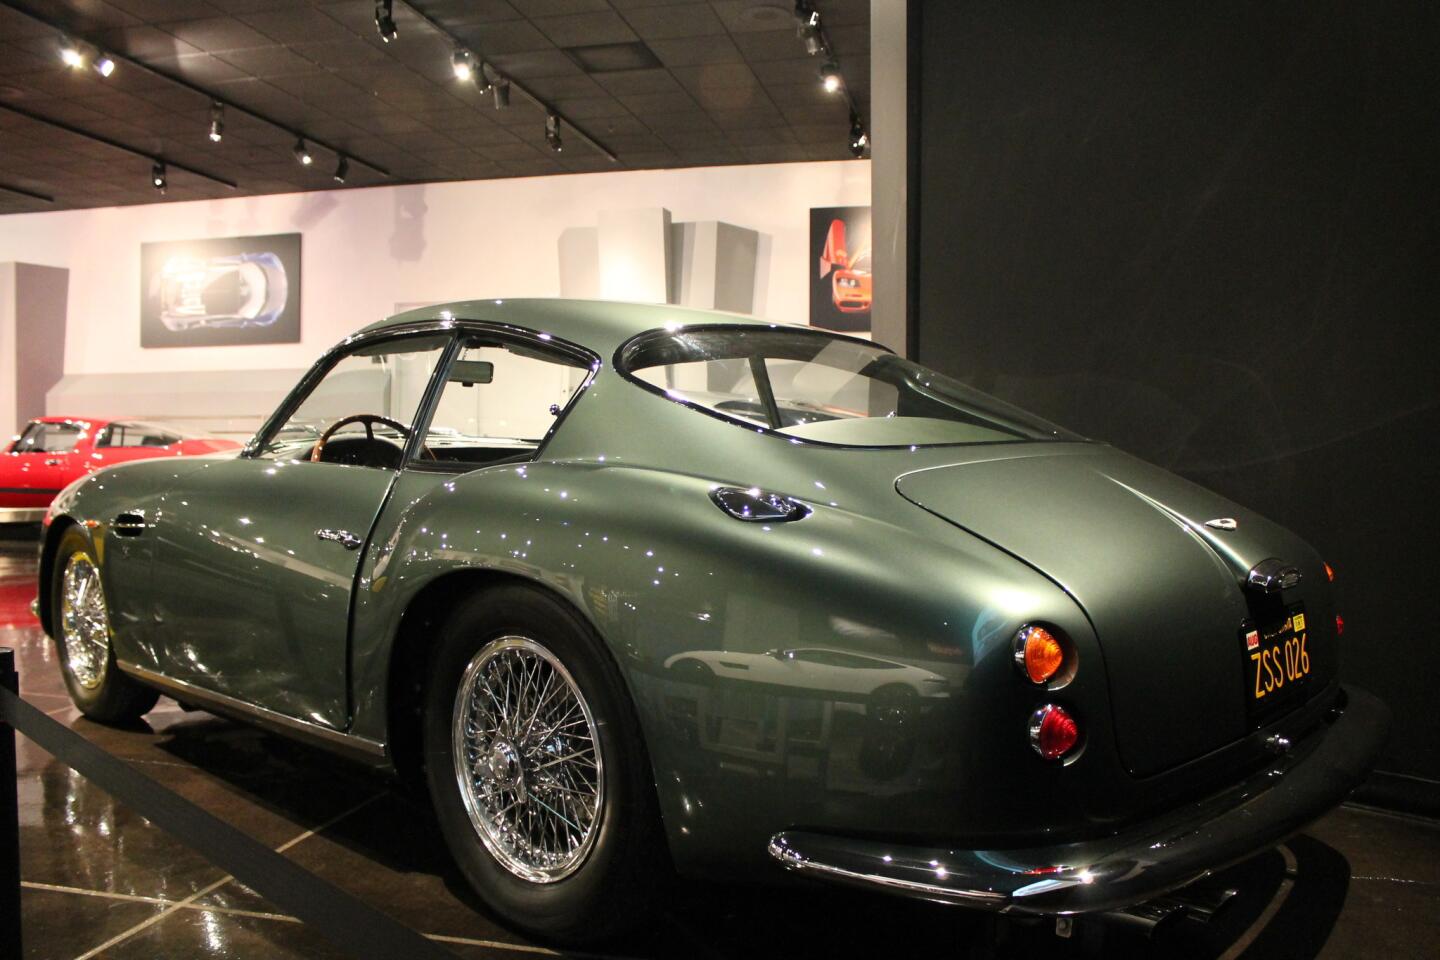 1961 Aston Martin DB4 Zagato chosen by Jaguar's Director of Design, Ian Callum